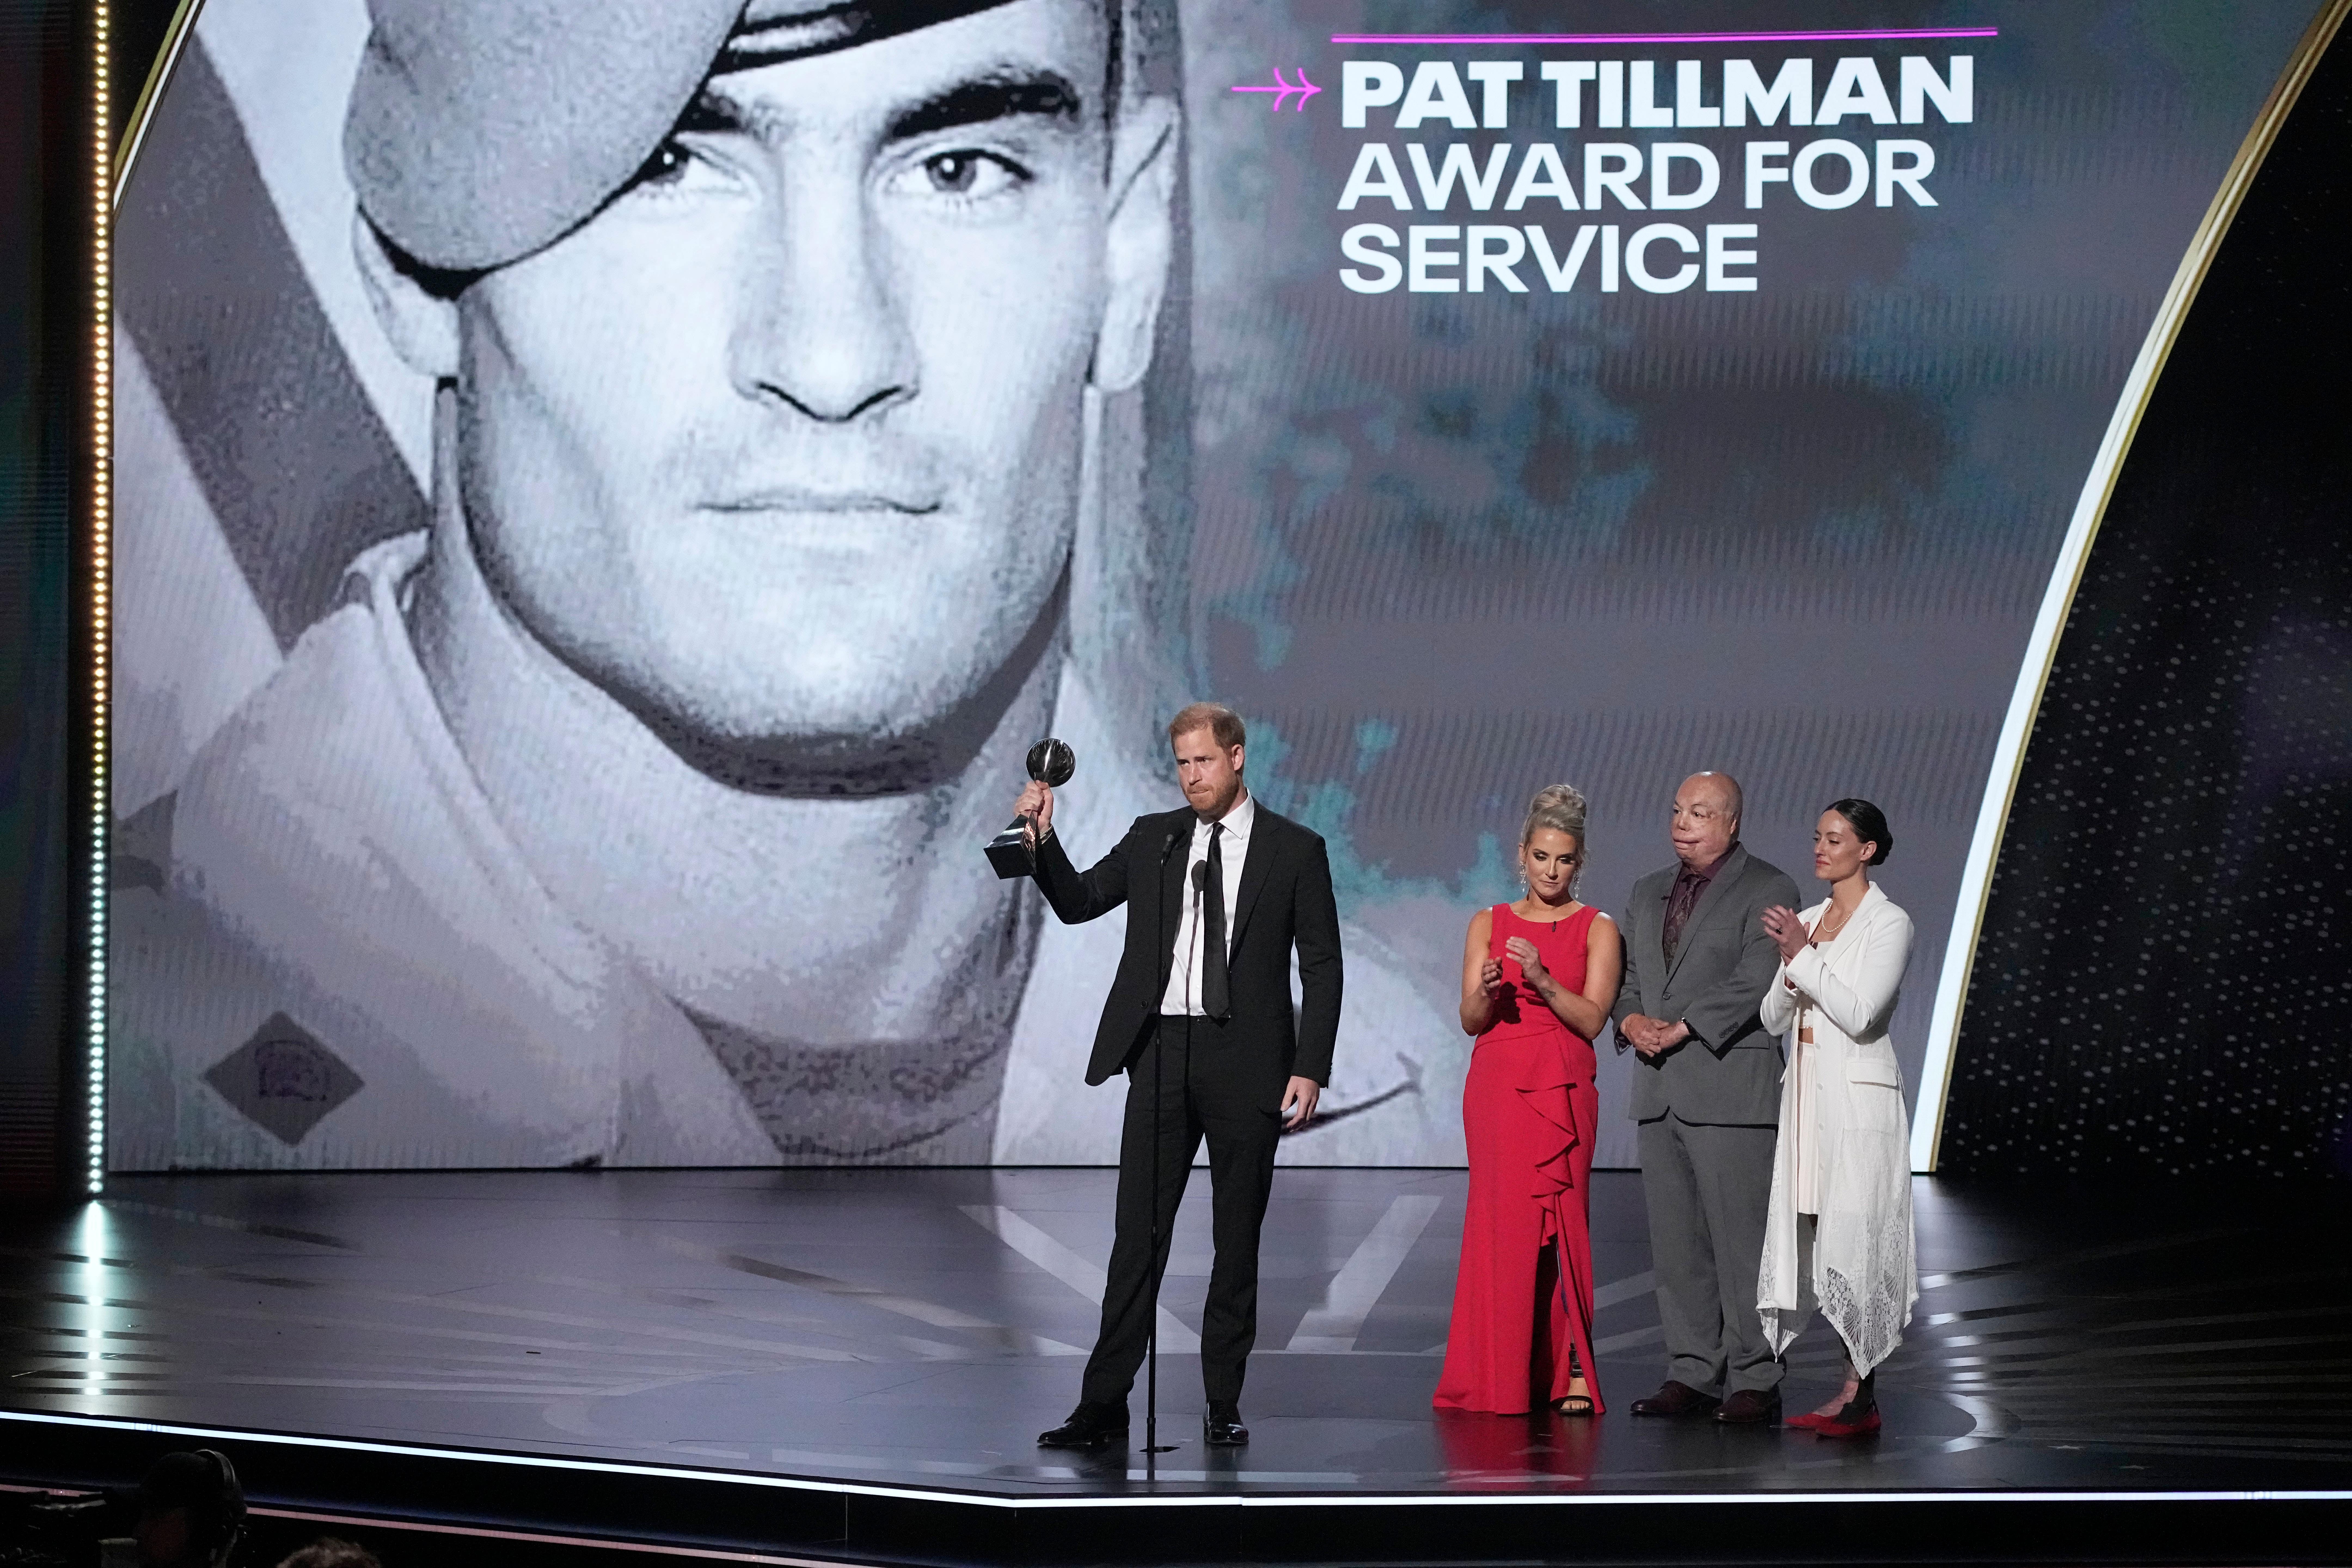 Prince Harry receives the Pat Tillman Award For Service at the Espy awards (Mark J Terrill/AP)